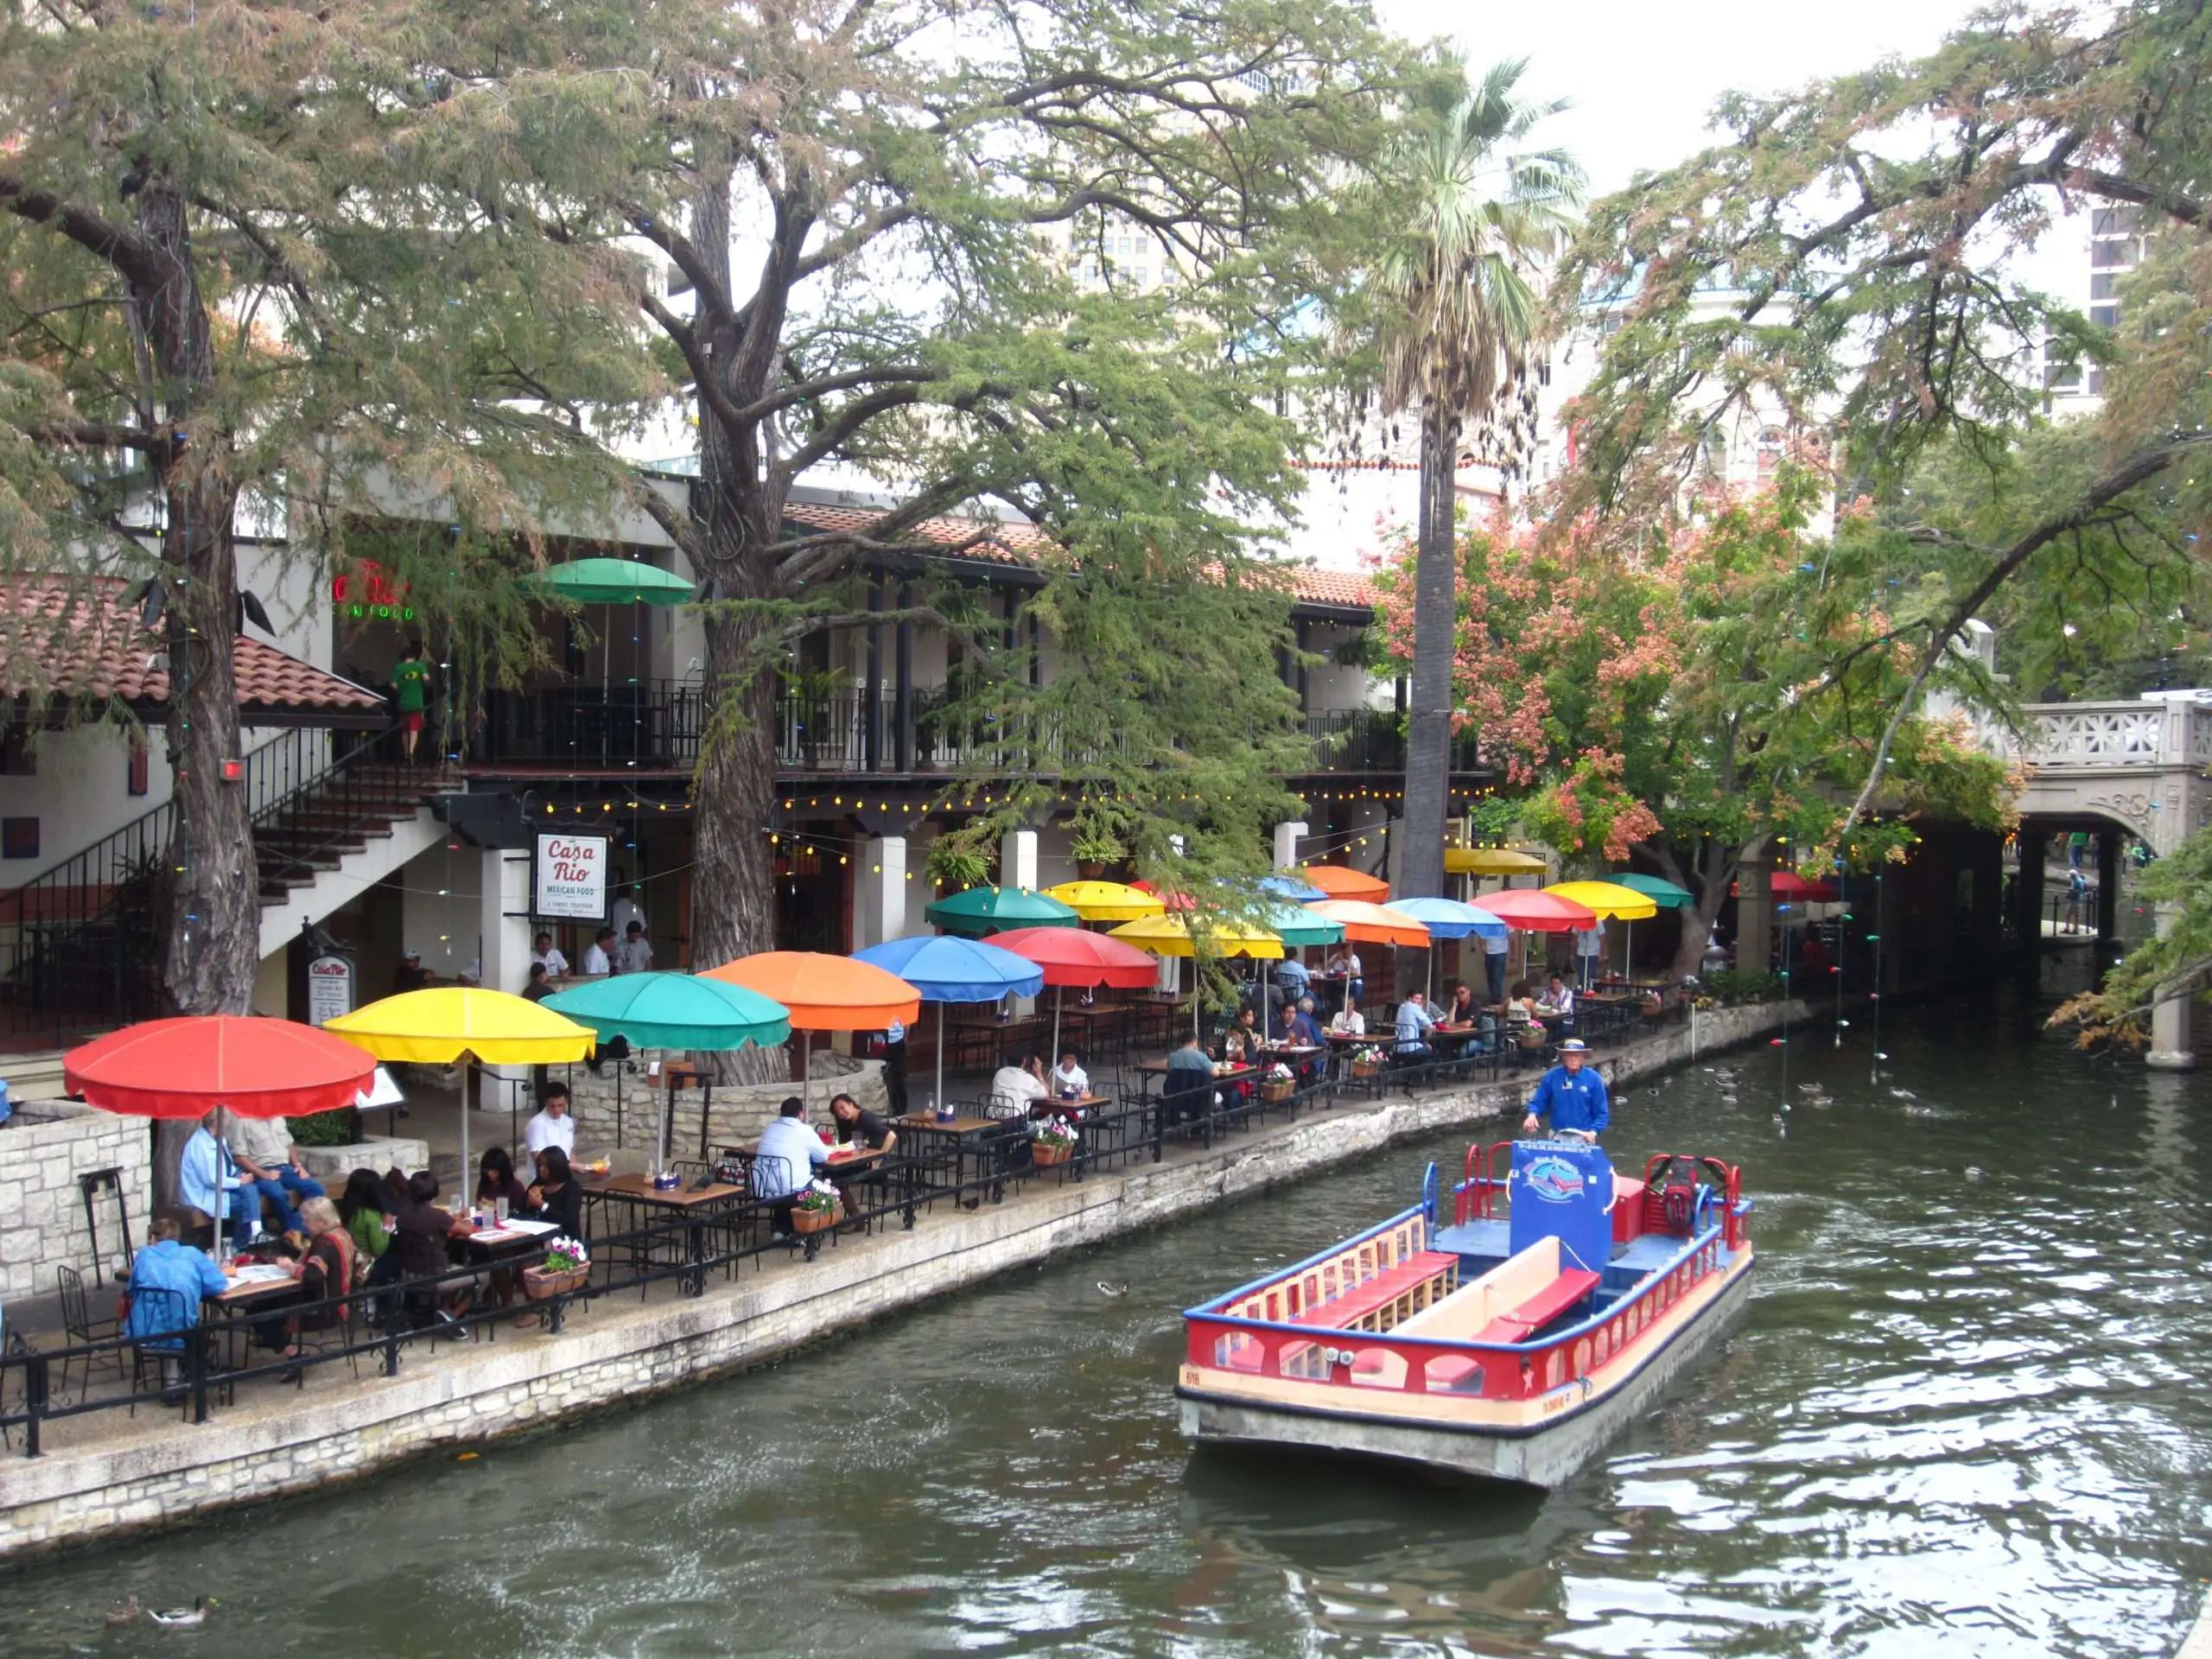 The famous River Walk in San Antonio, Texas. Take a walk ...